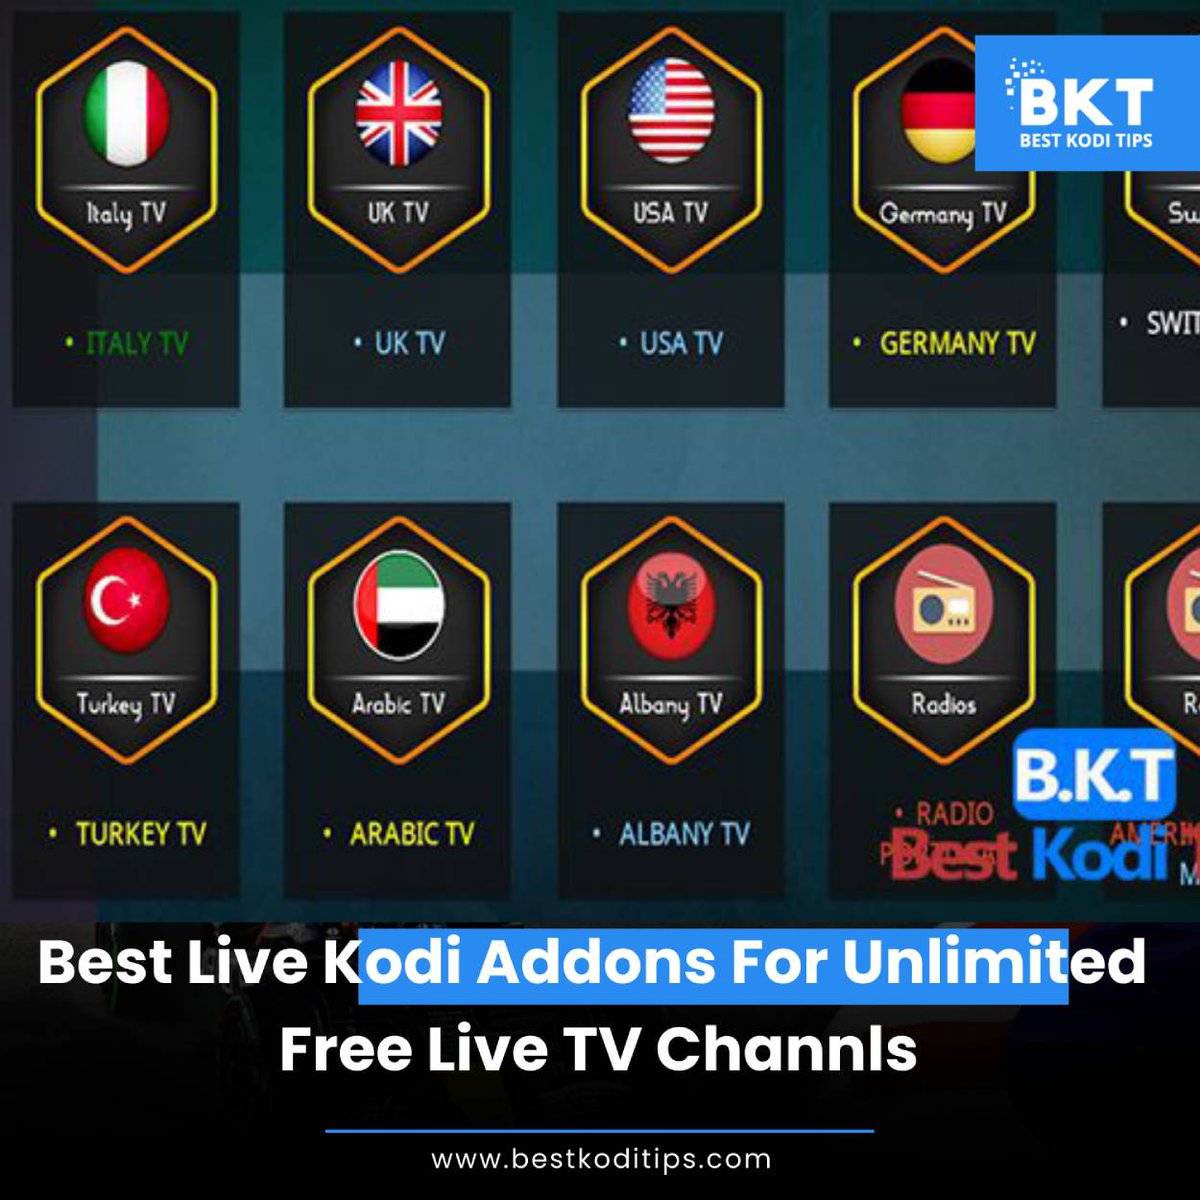 Best Live TV Kodi Addons For Unlimited Free Live TV Channels
#trending #Kodi20Nexus #TV #TopX #Kodi #Addons #freeliveTV #Channels #bestkoditips #blog #bkt 
bestkoditips.com/kodi-addons-fo…